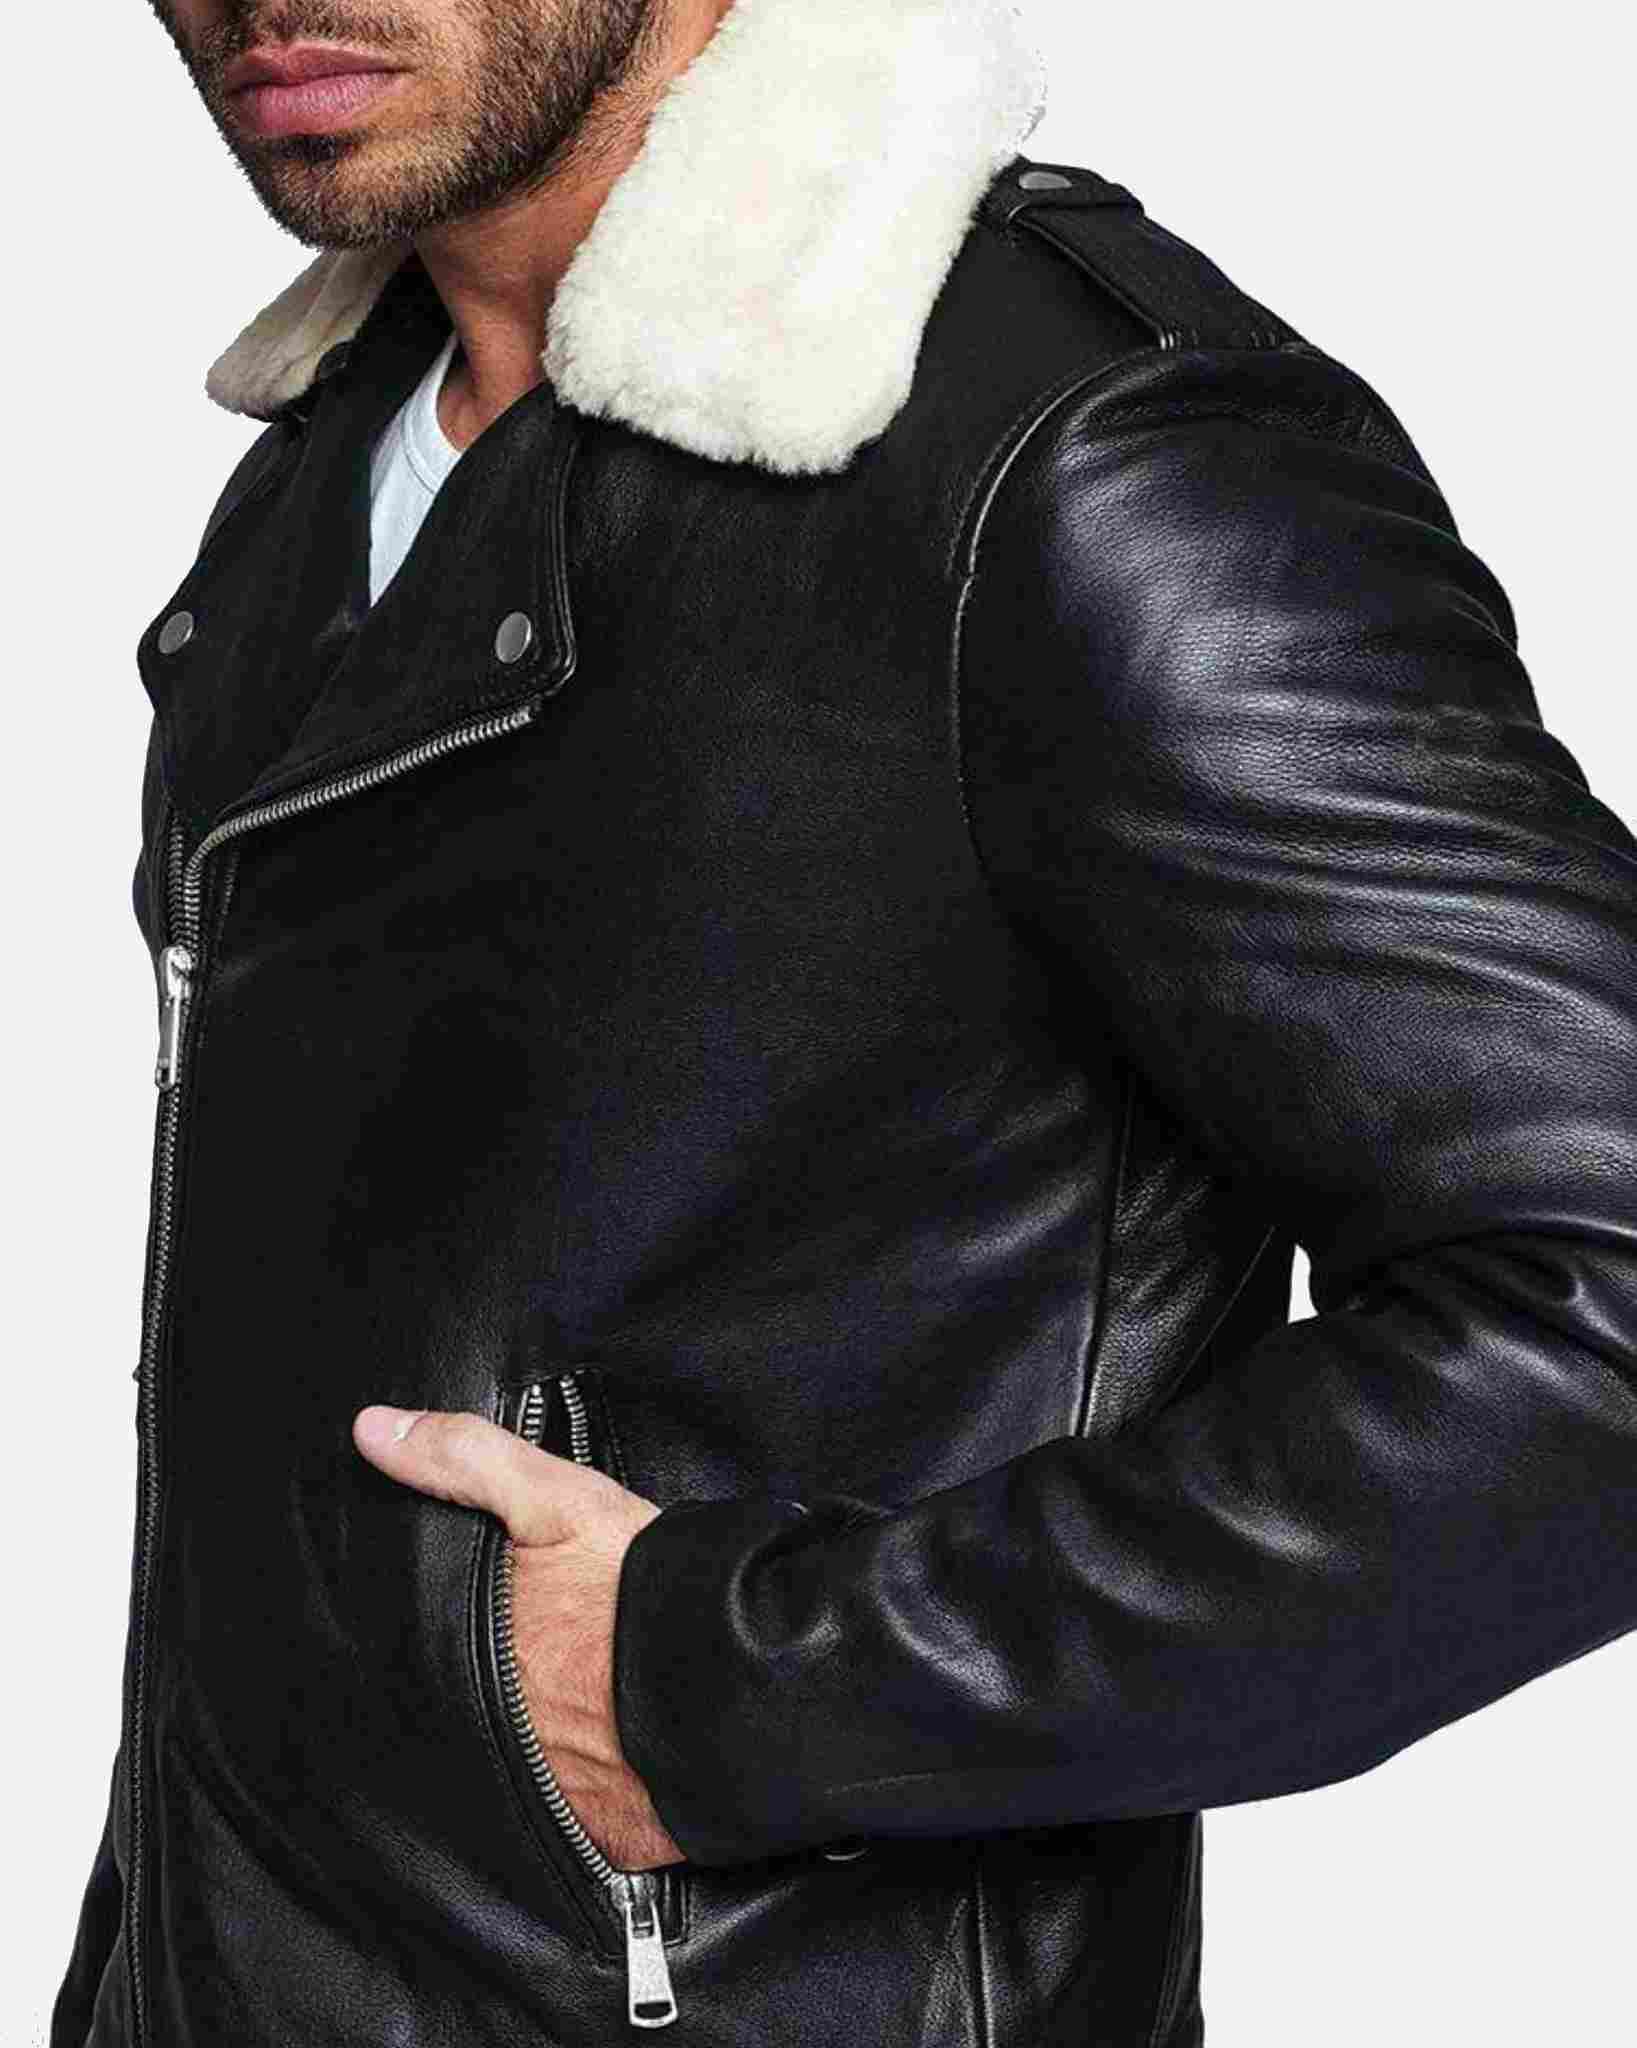 mens-black-fur-collared-biker-leather-jacket-100-genuine-lambskin (1)